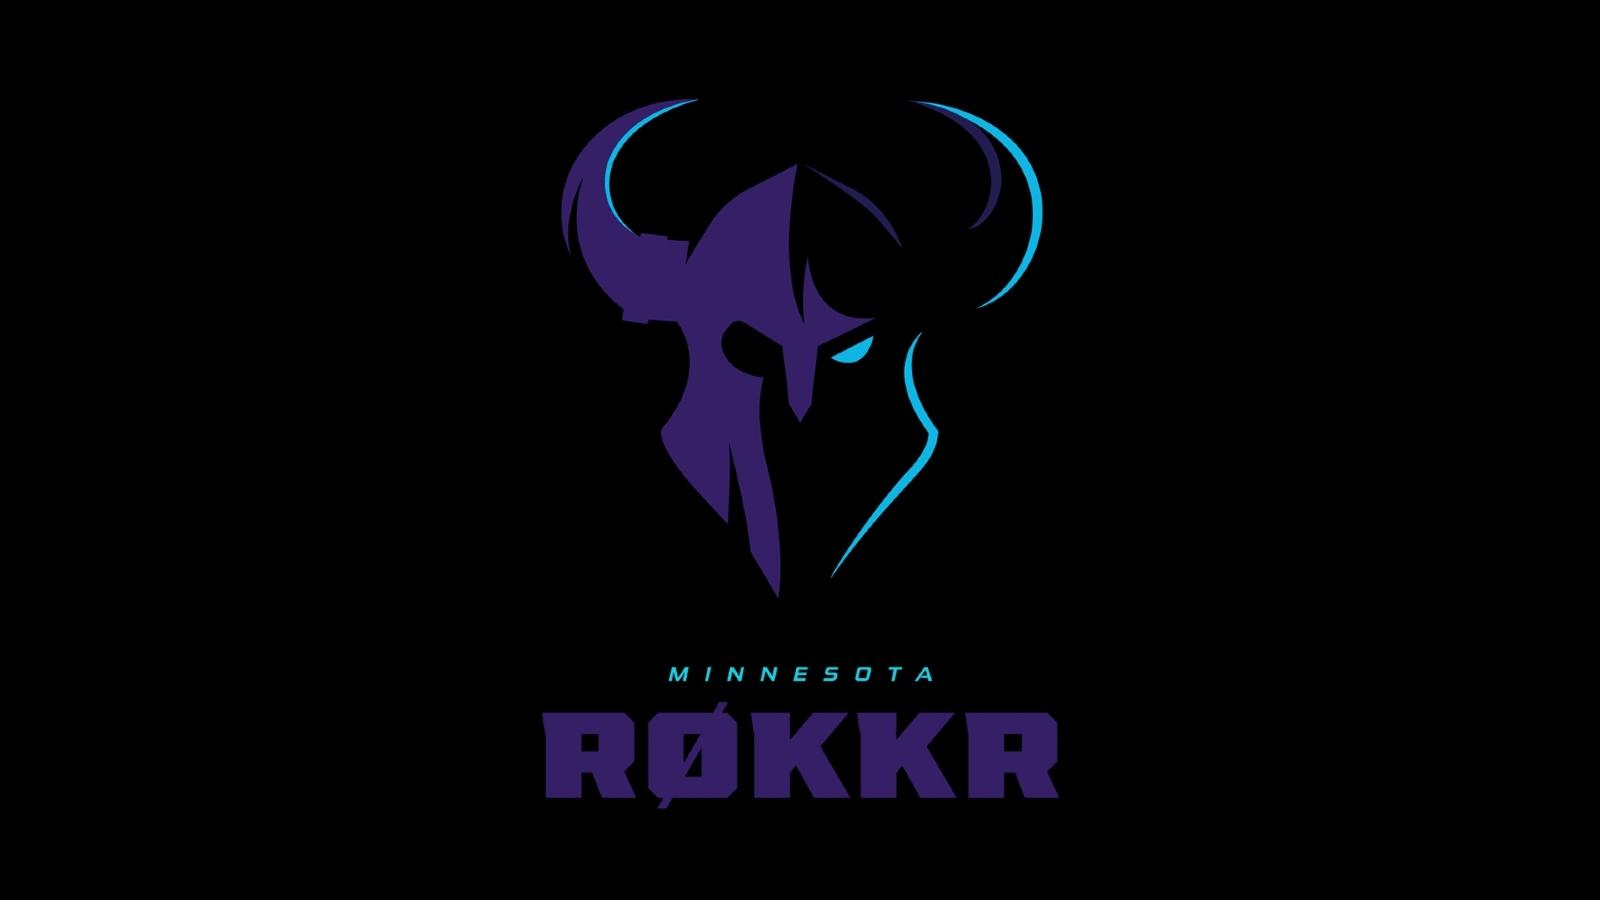 Minnesota Rokkr logo on black background